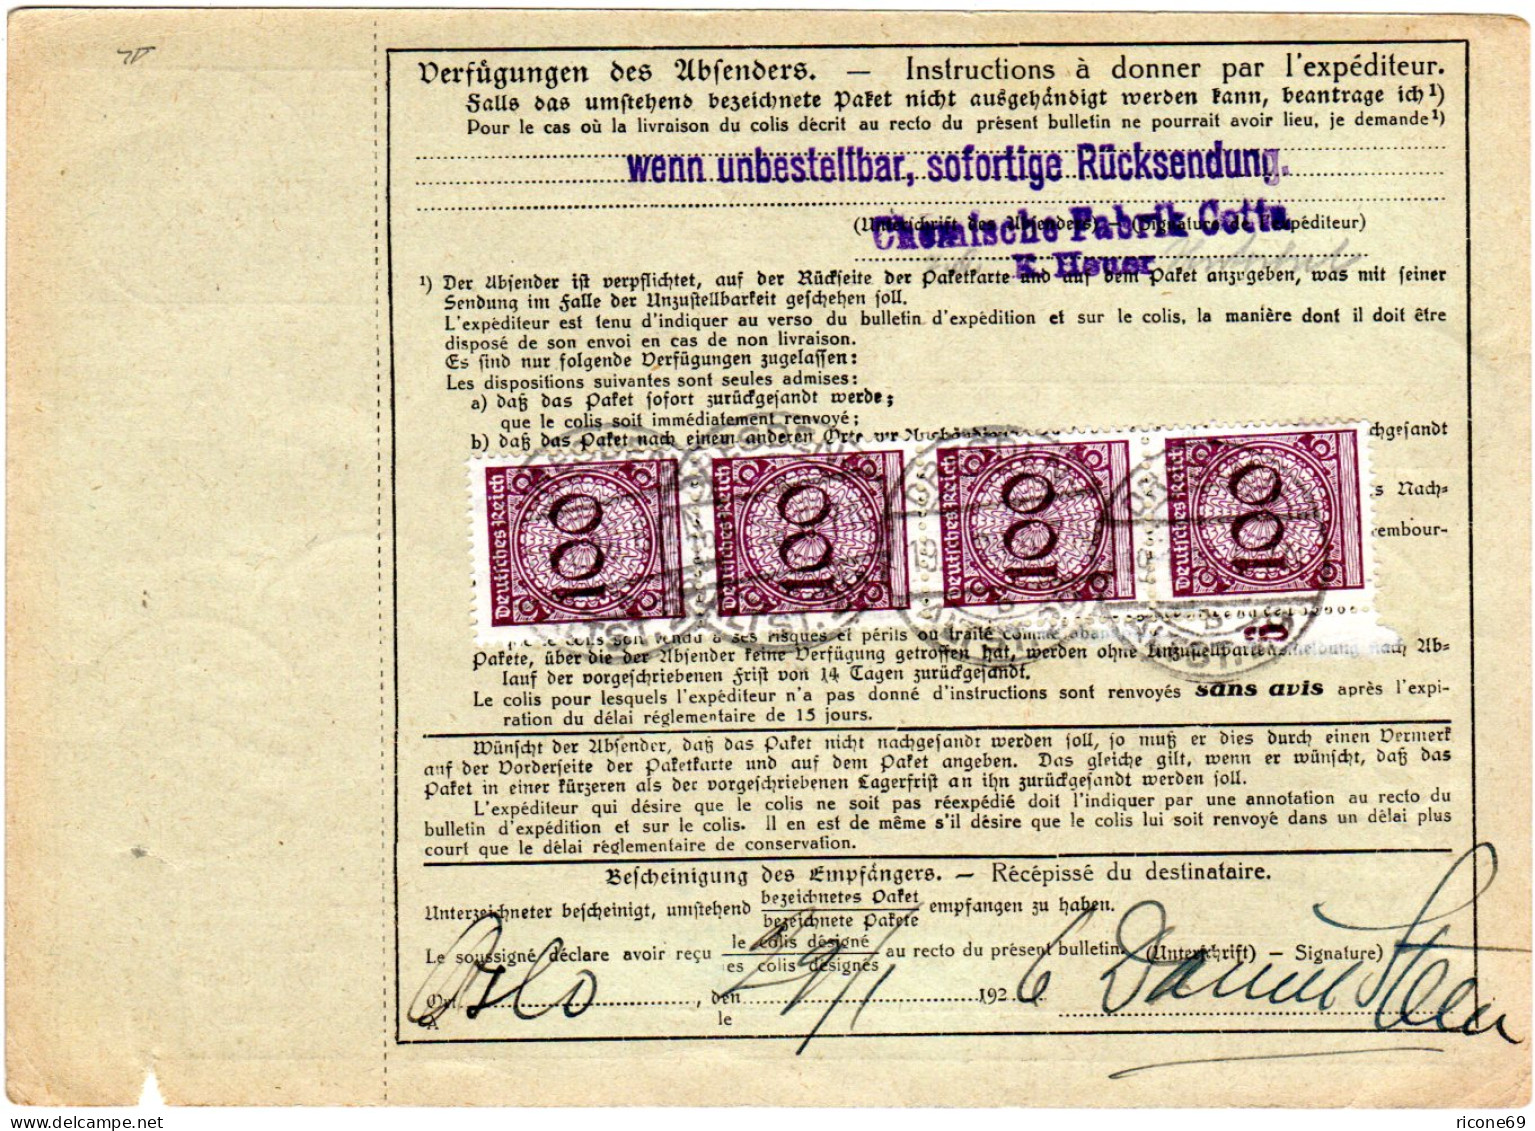 DR 1926, 4x100+40+50 Pf. Vs.+rs. Auf Paketkarte V. DRESDEN 29 N. Norwegen - Covers & Documents